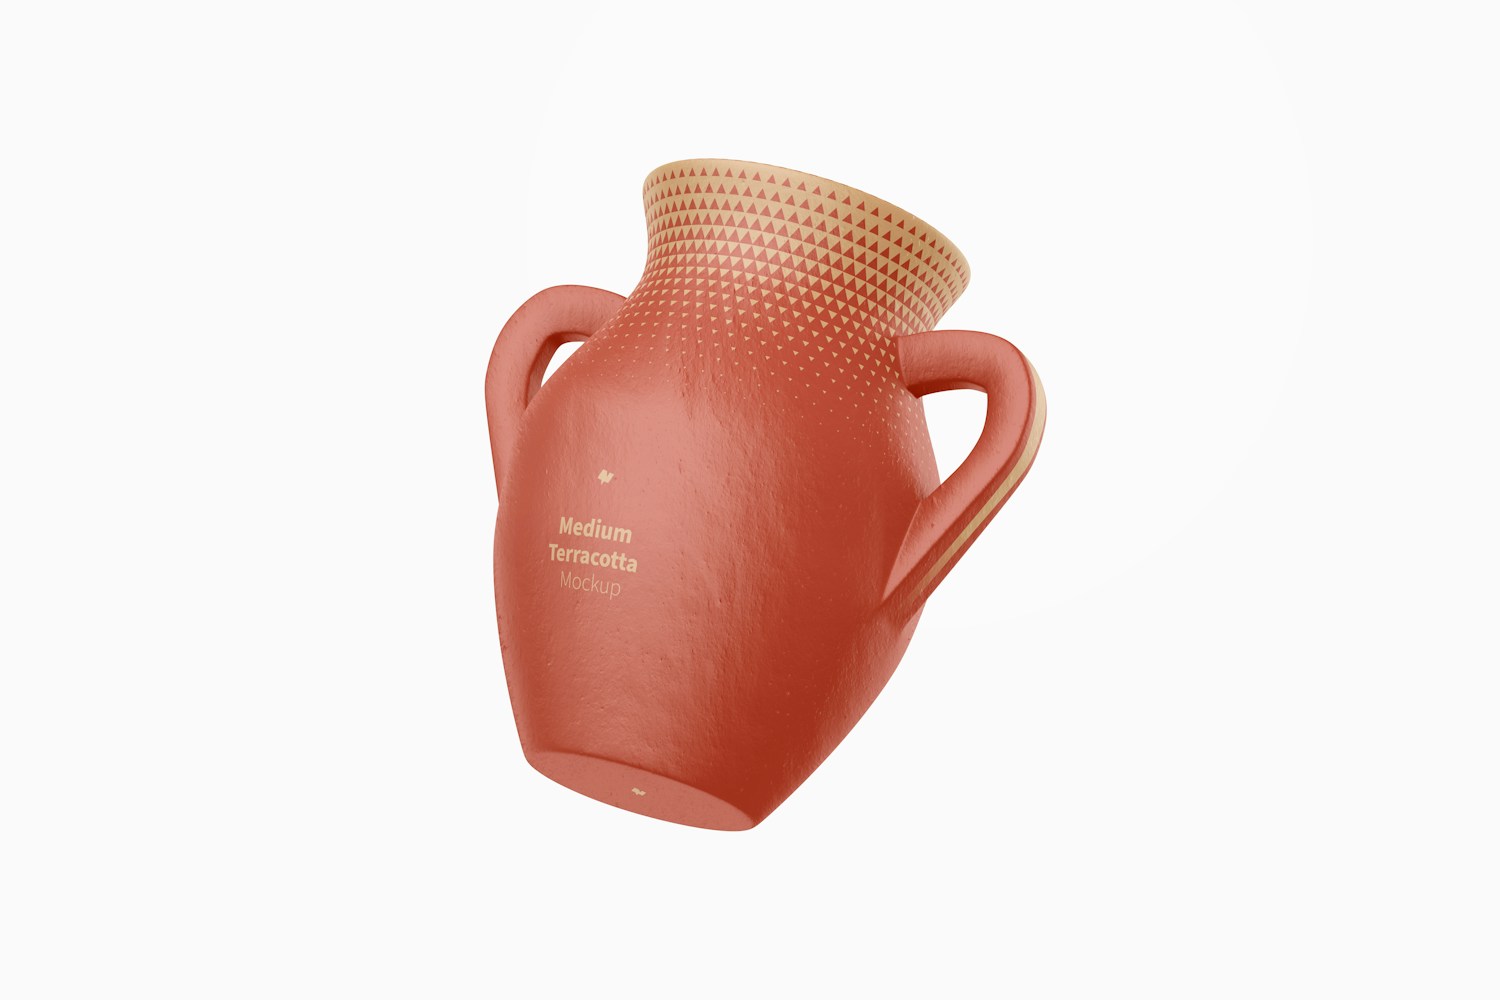 Medium Terracotta Vase with Handles Mockup, Floating